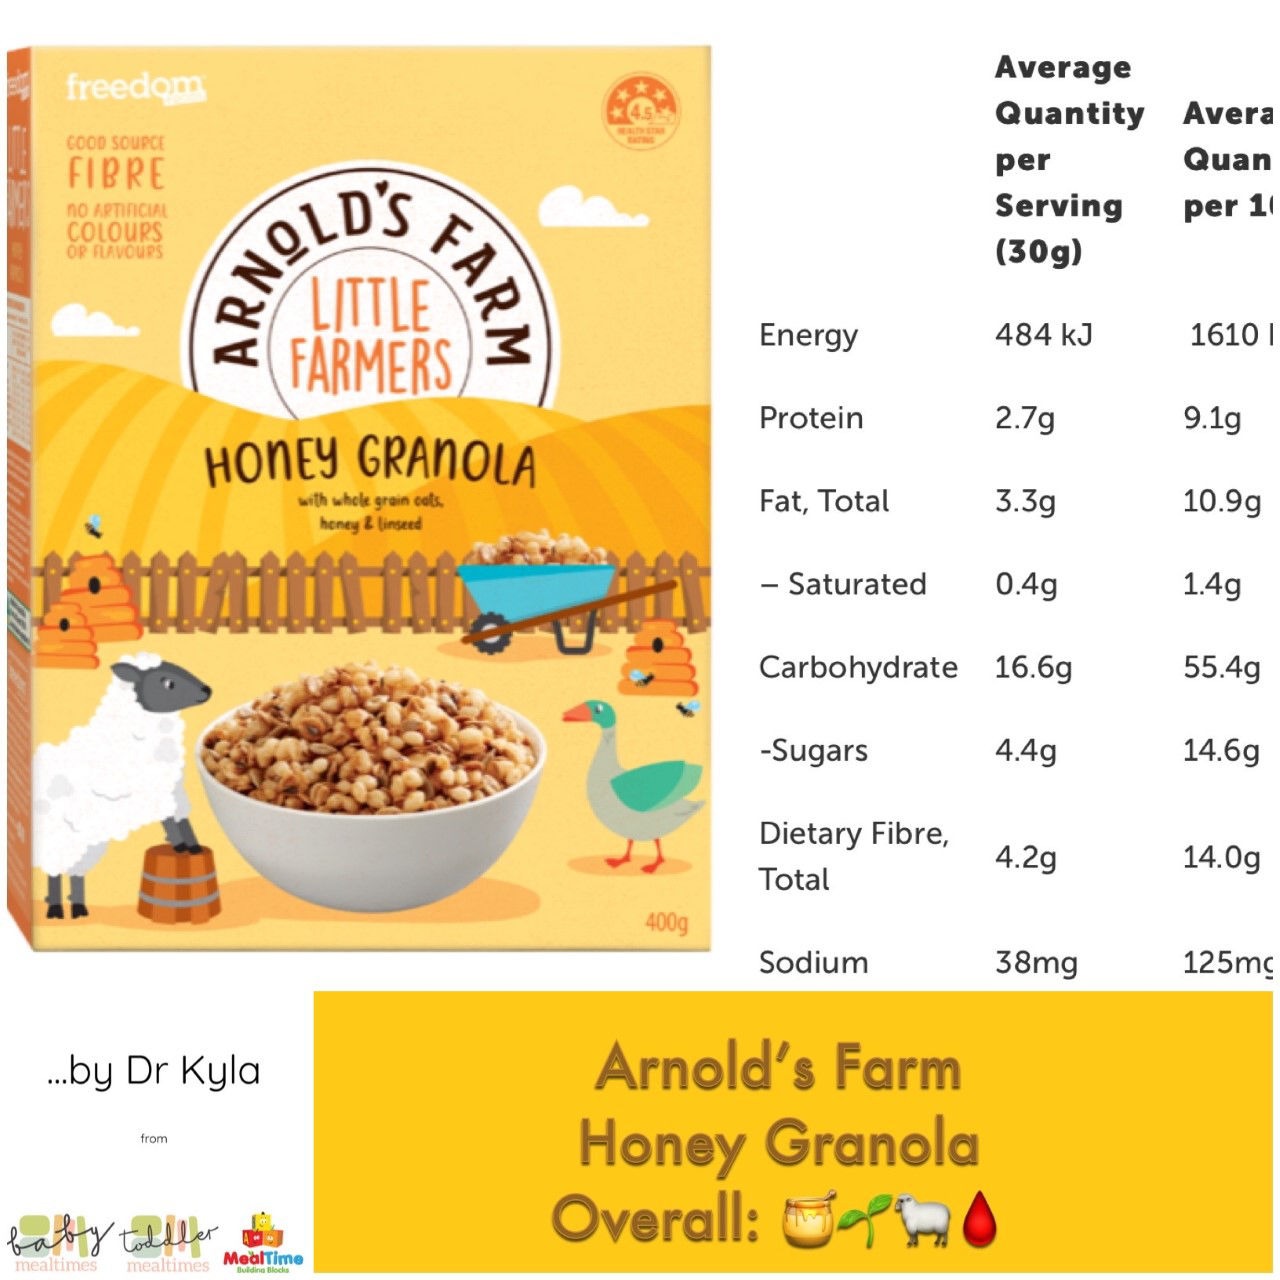 arnolds-farm-little-farmers-honey-granola